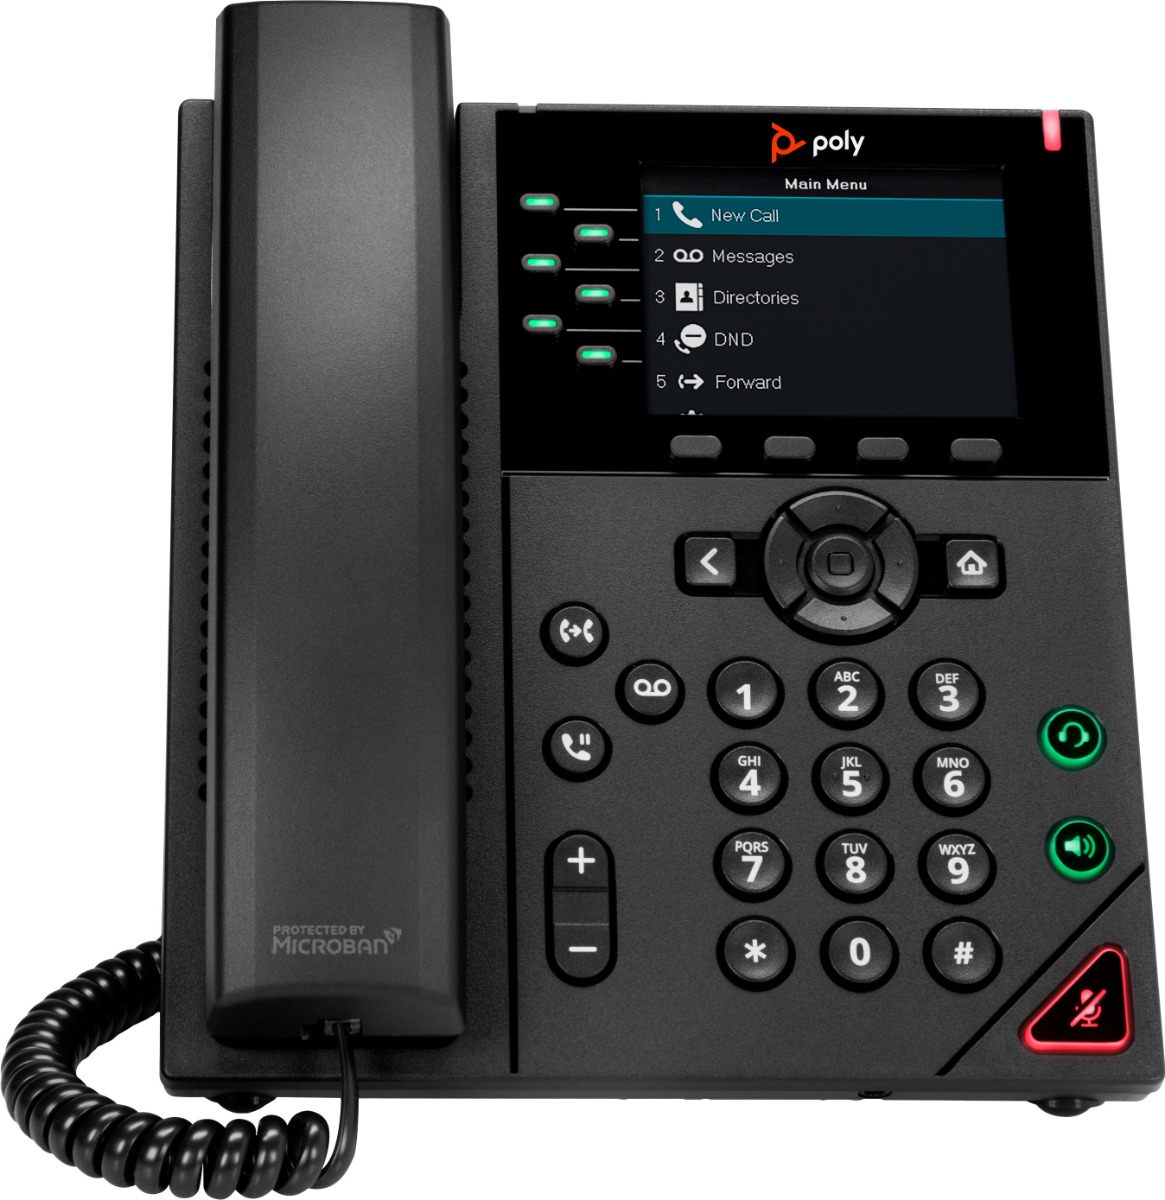 What is the number of line keys in the Polycom VVX 350 6-Line Mid-range Color IP Desktop Phone?